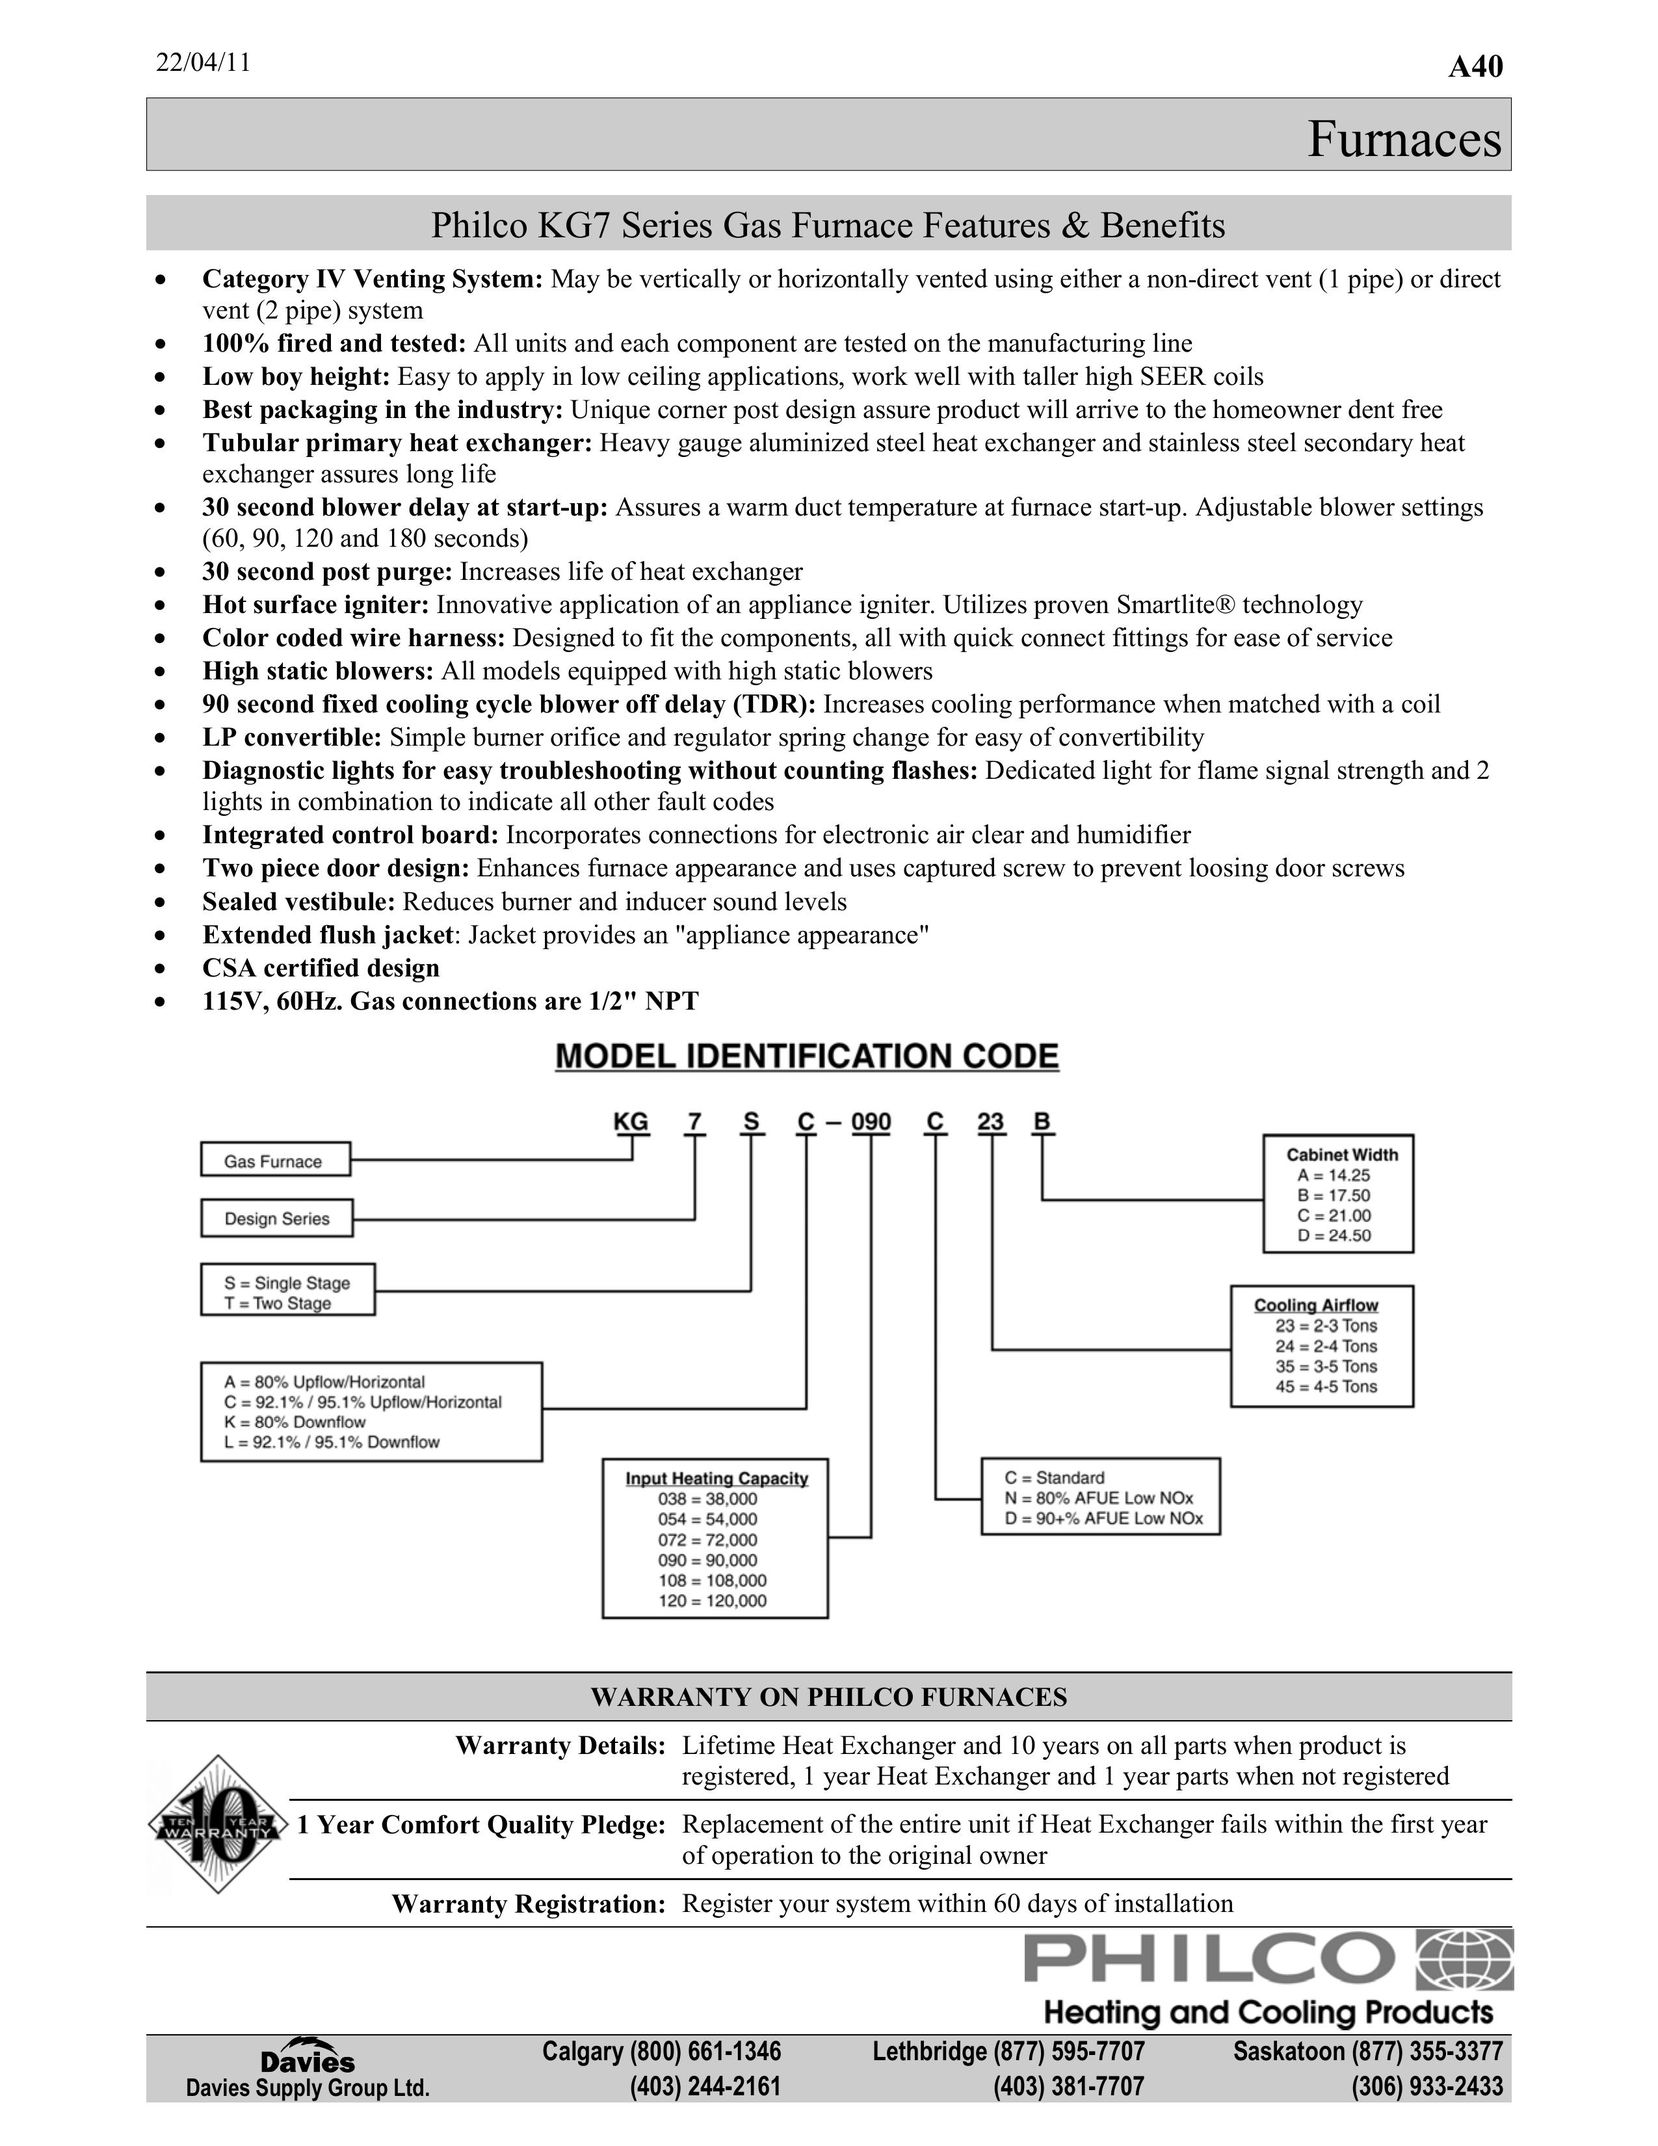 Frigidaire KG7 Furnace User Manual